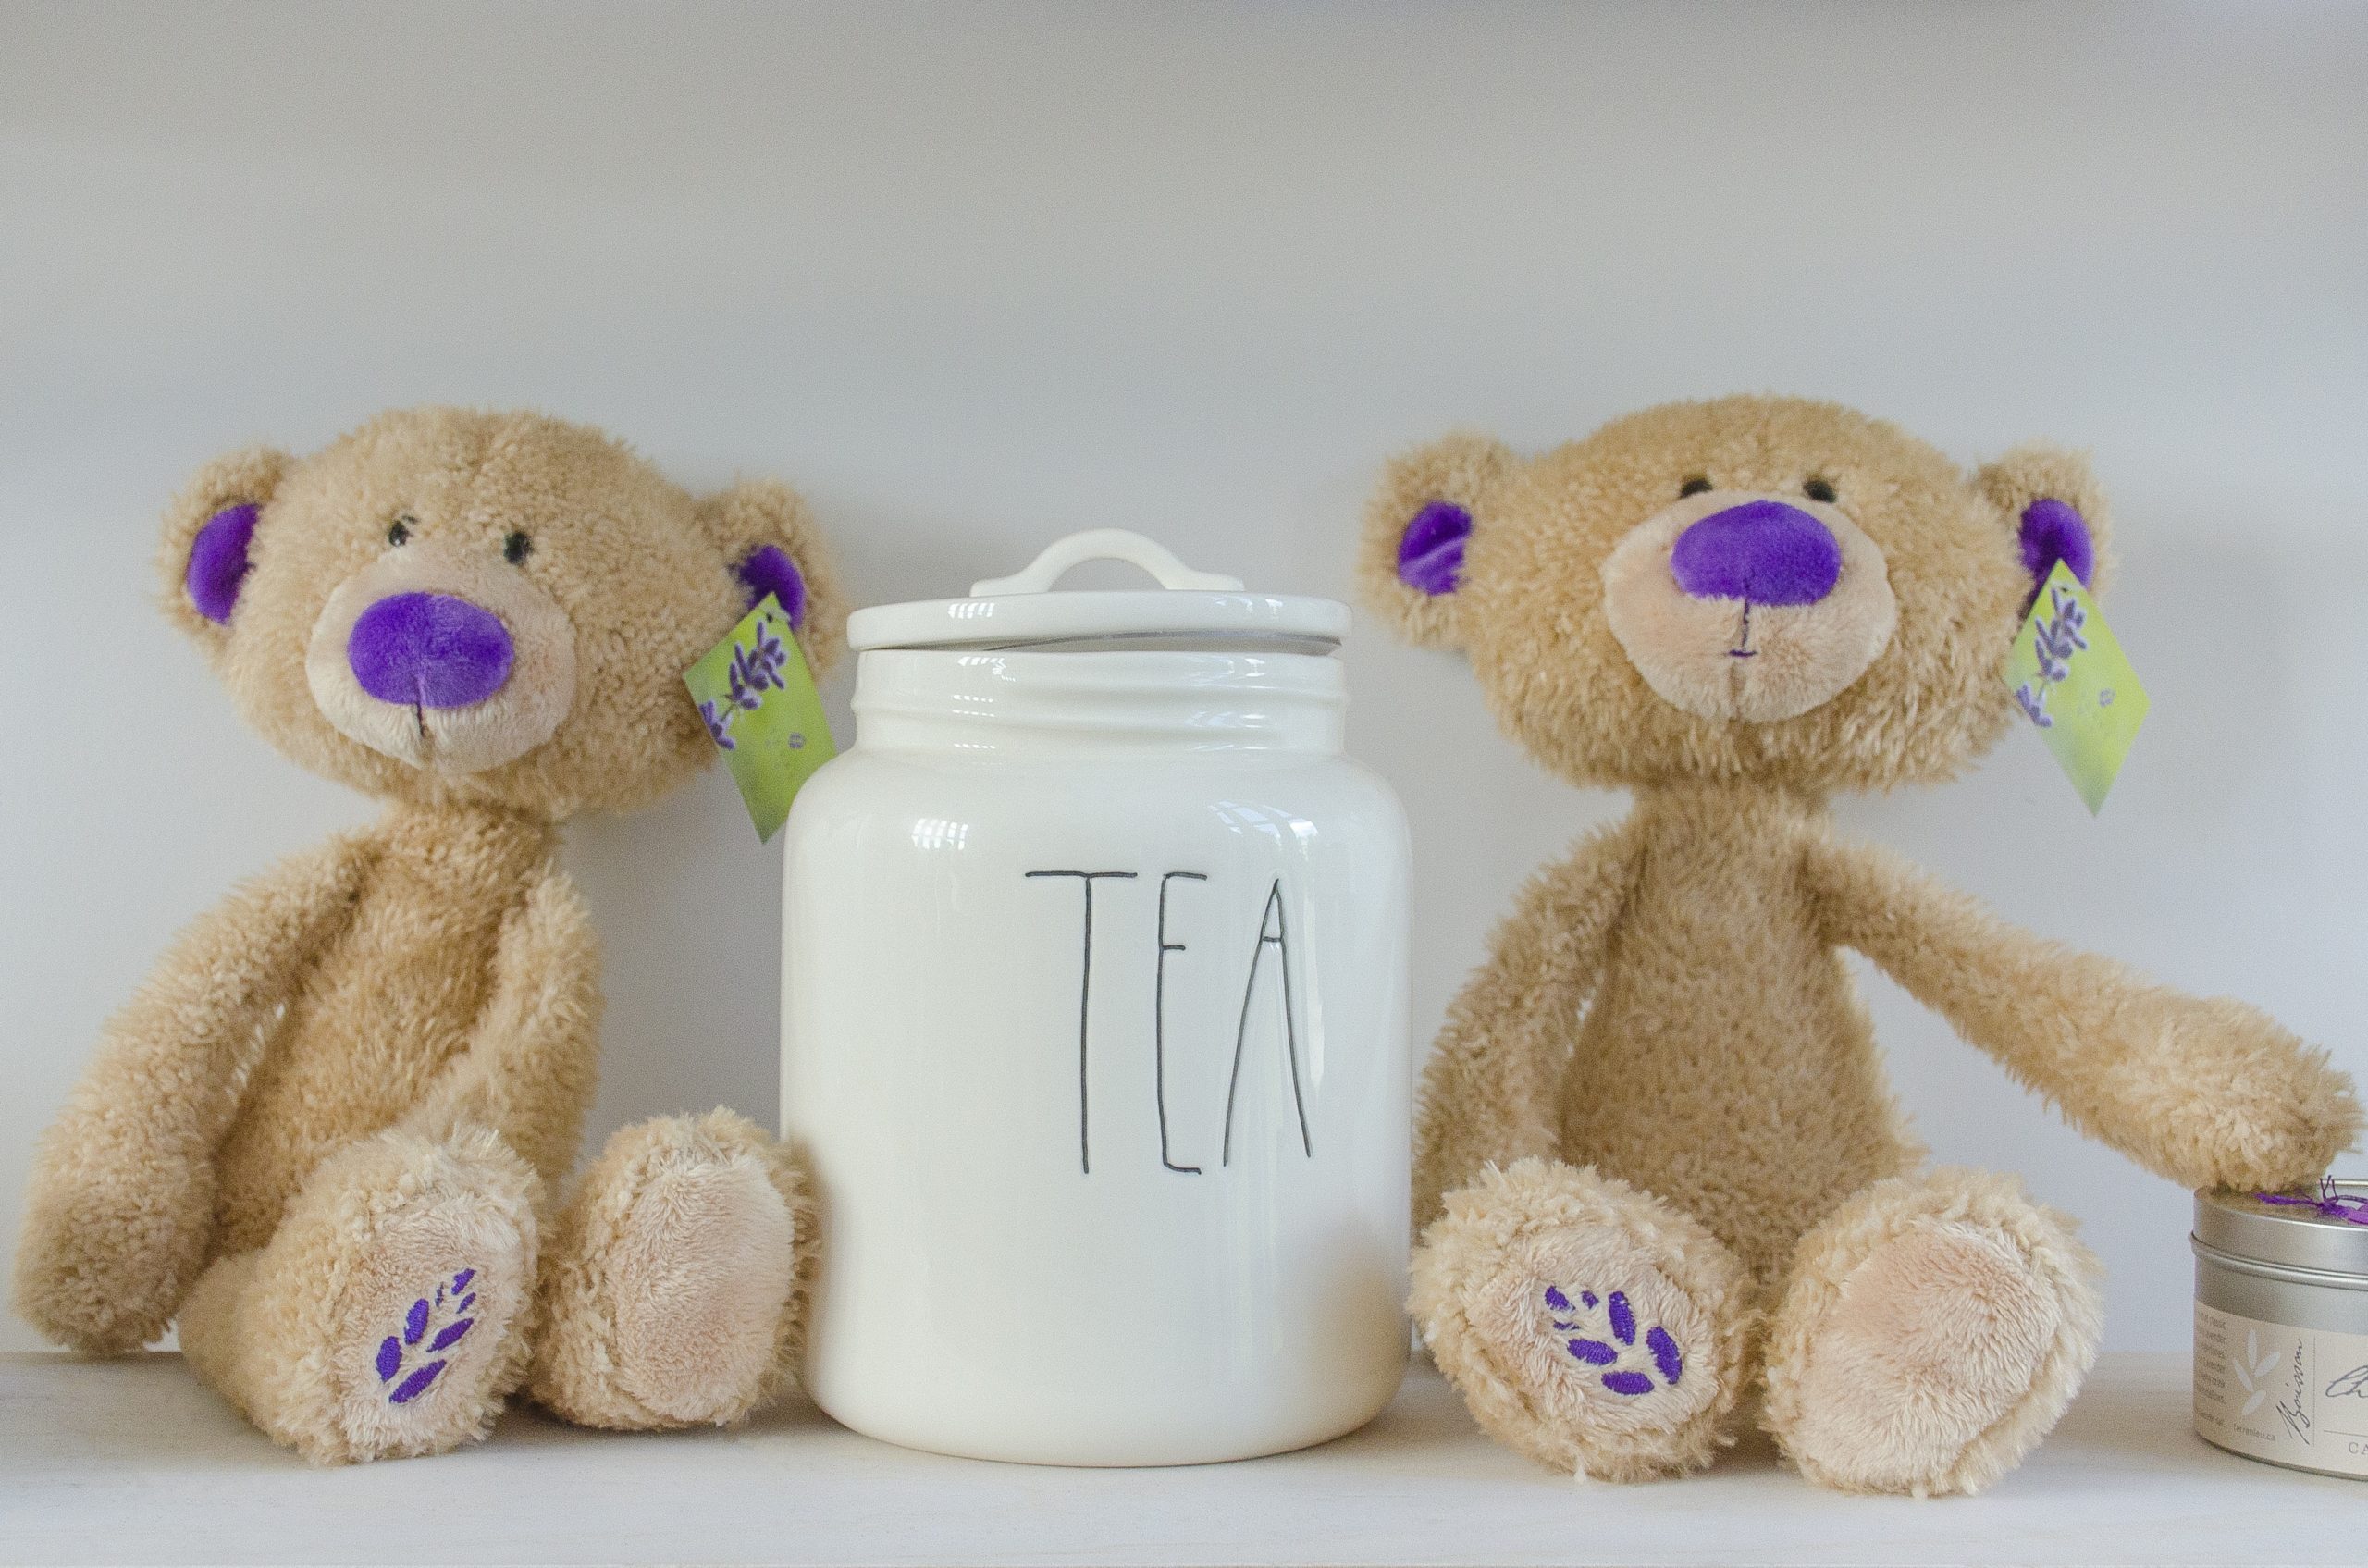 How to make lavender tea